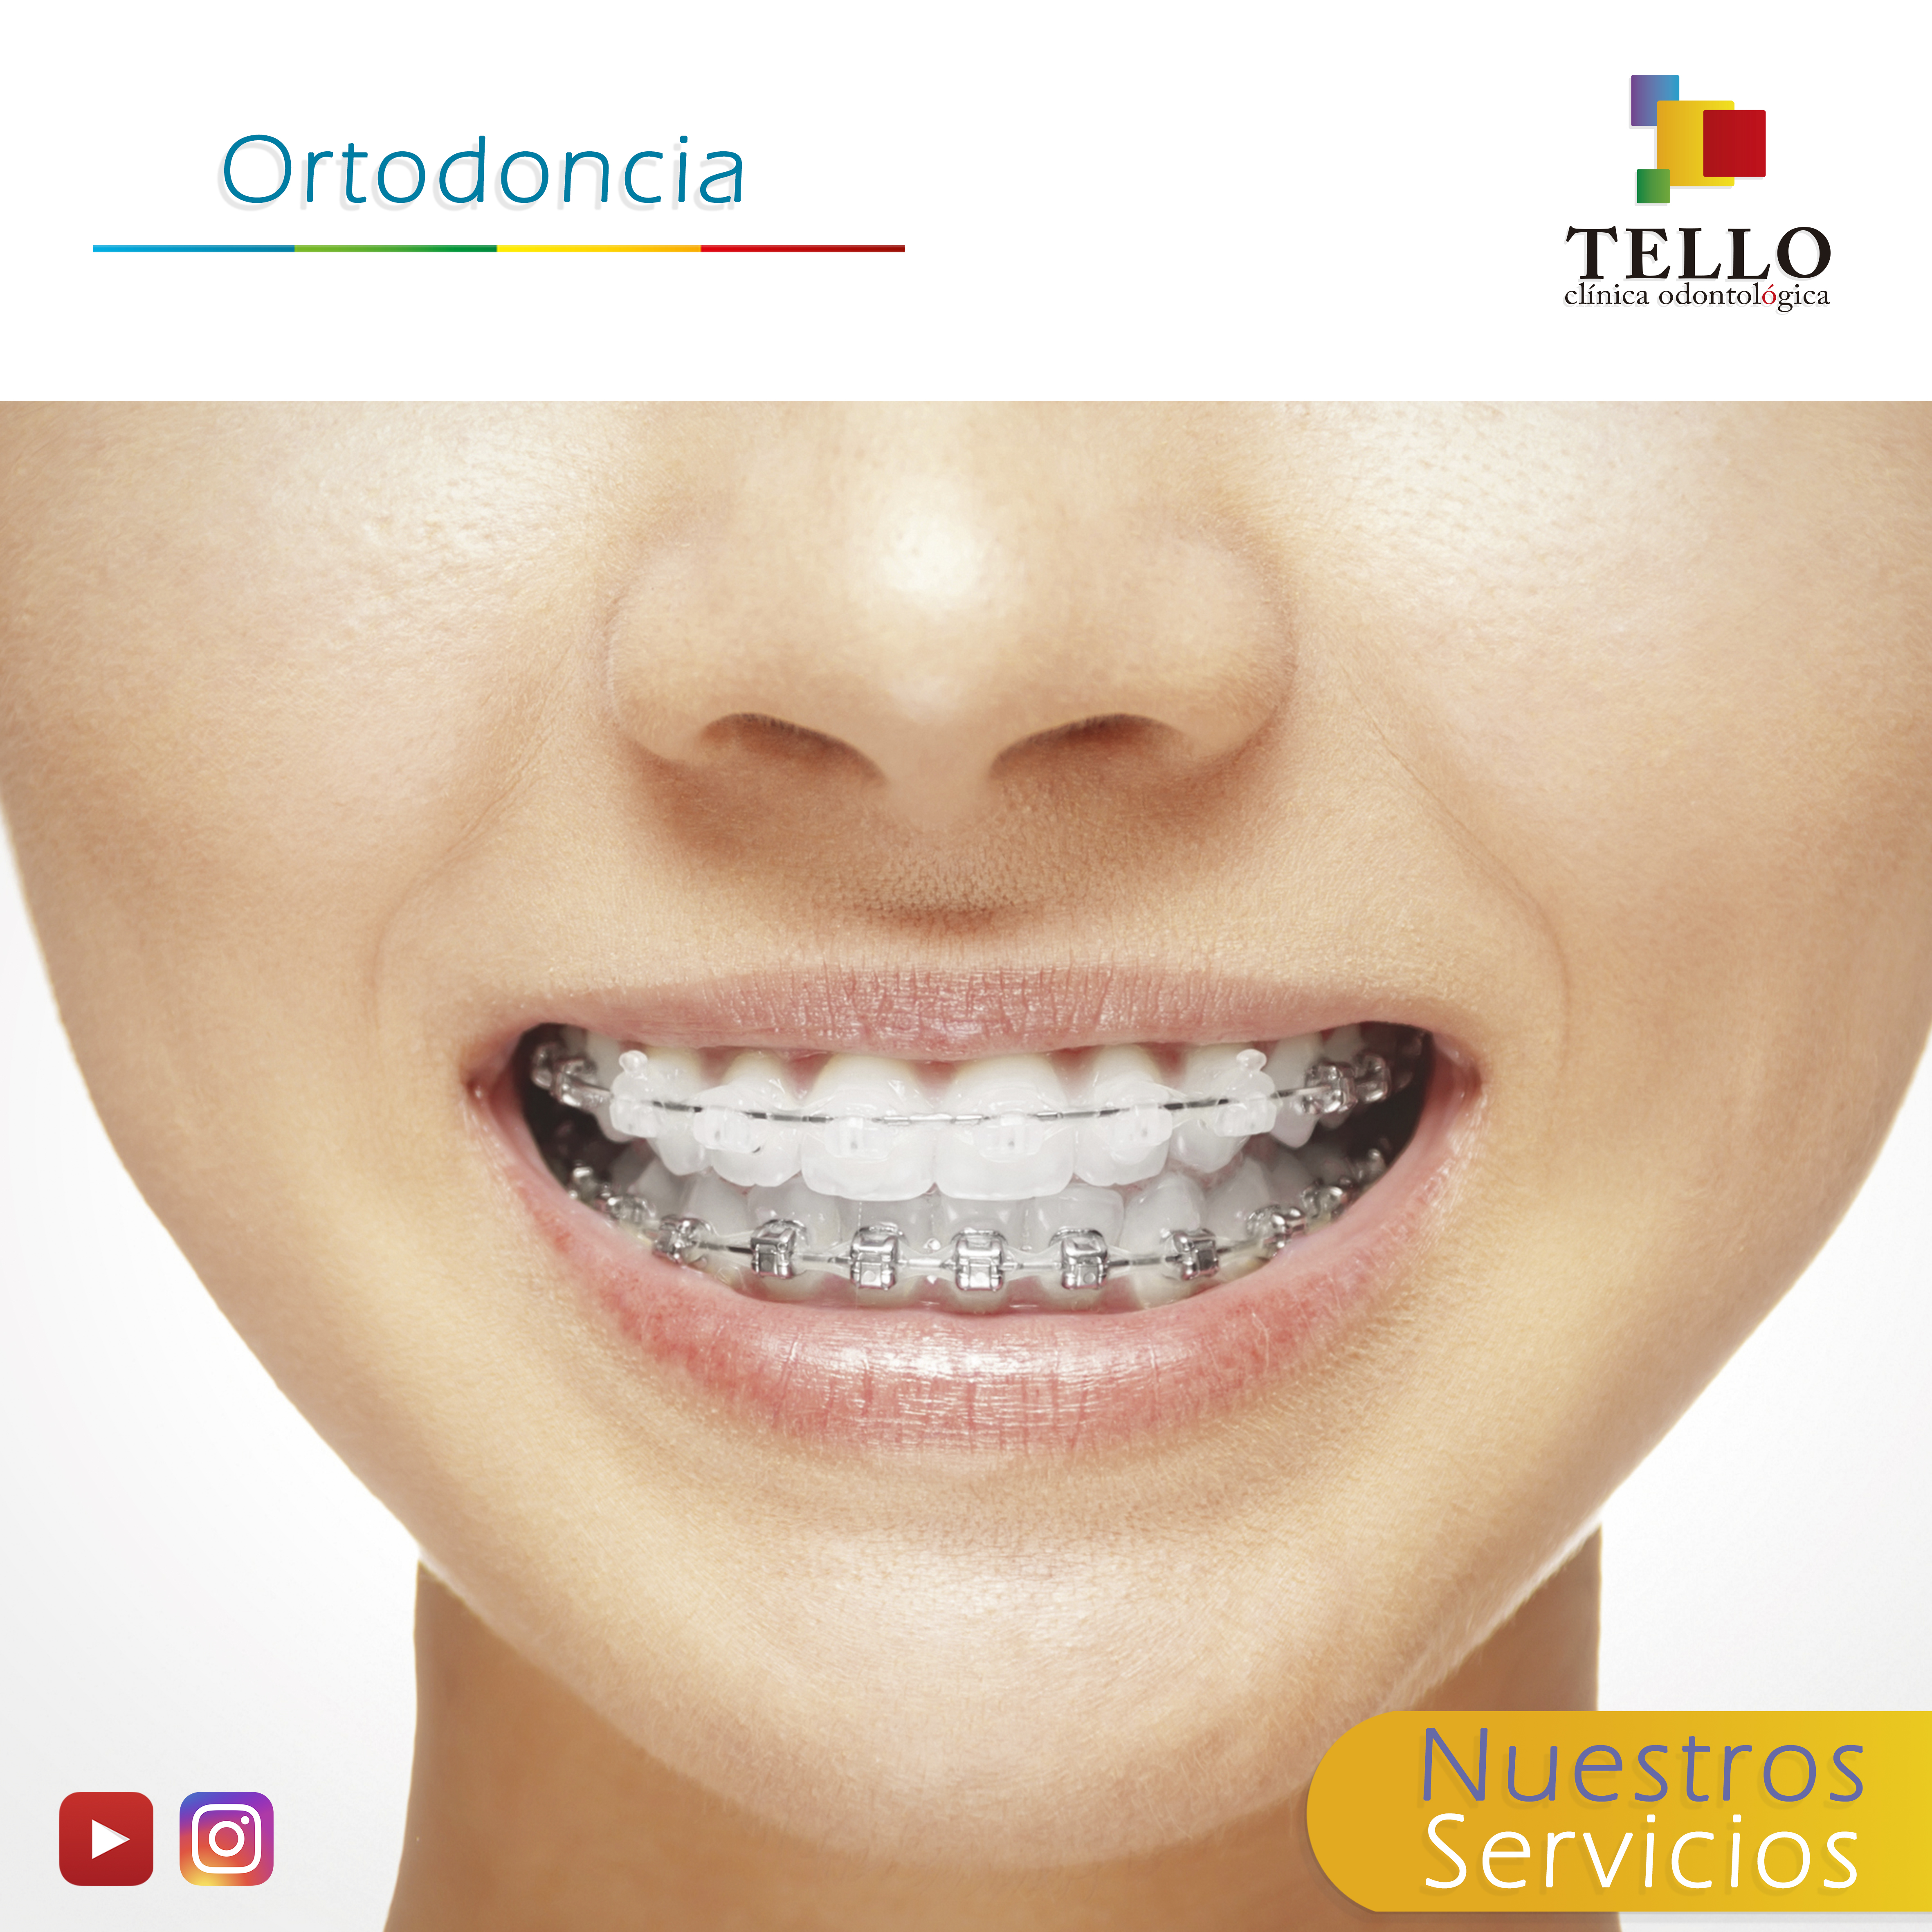 ortodoncia tello odontología cochabamba bolivia